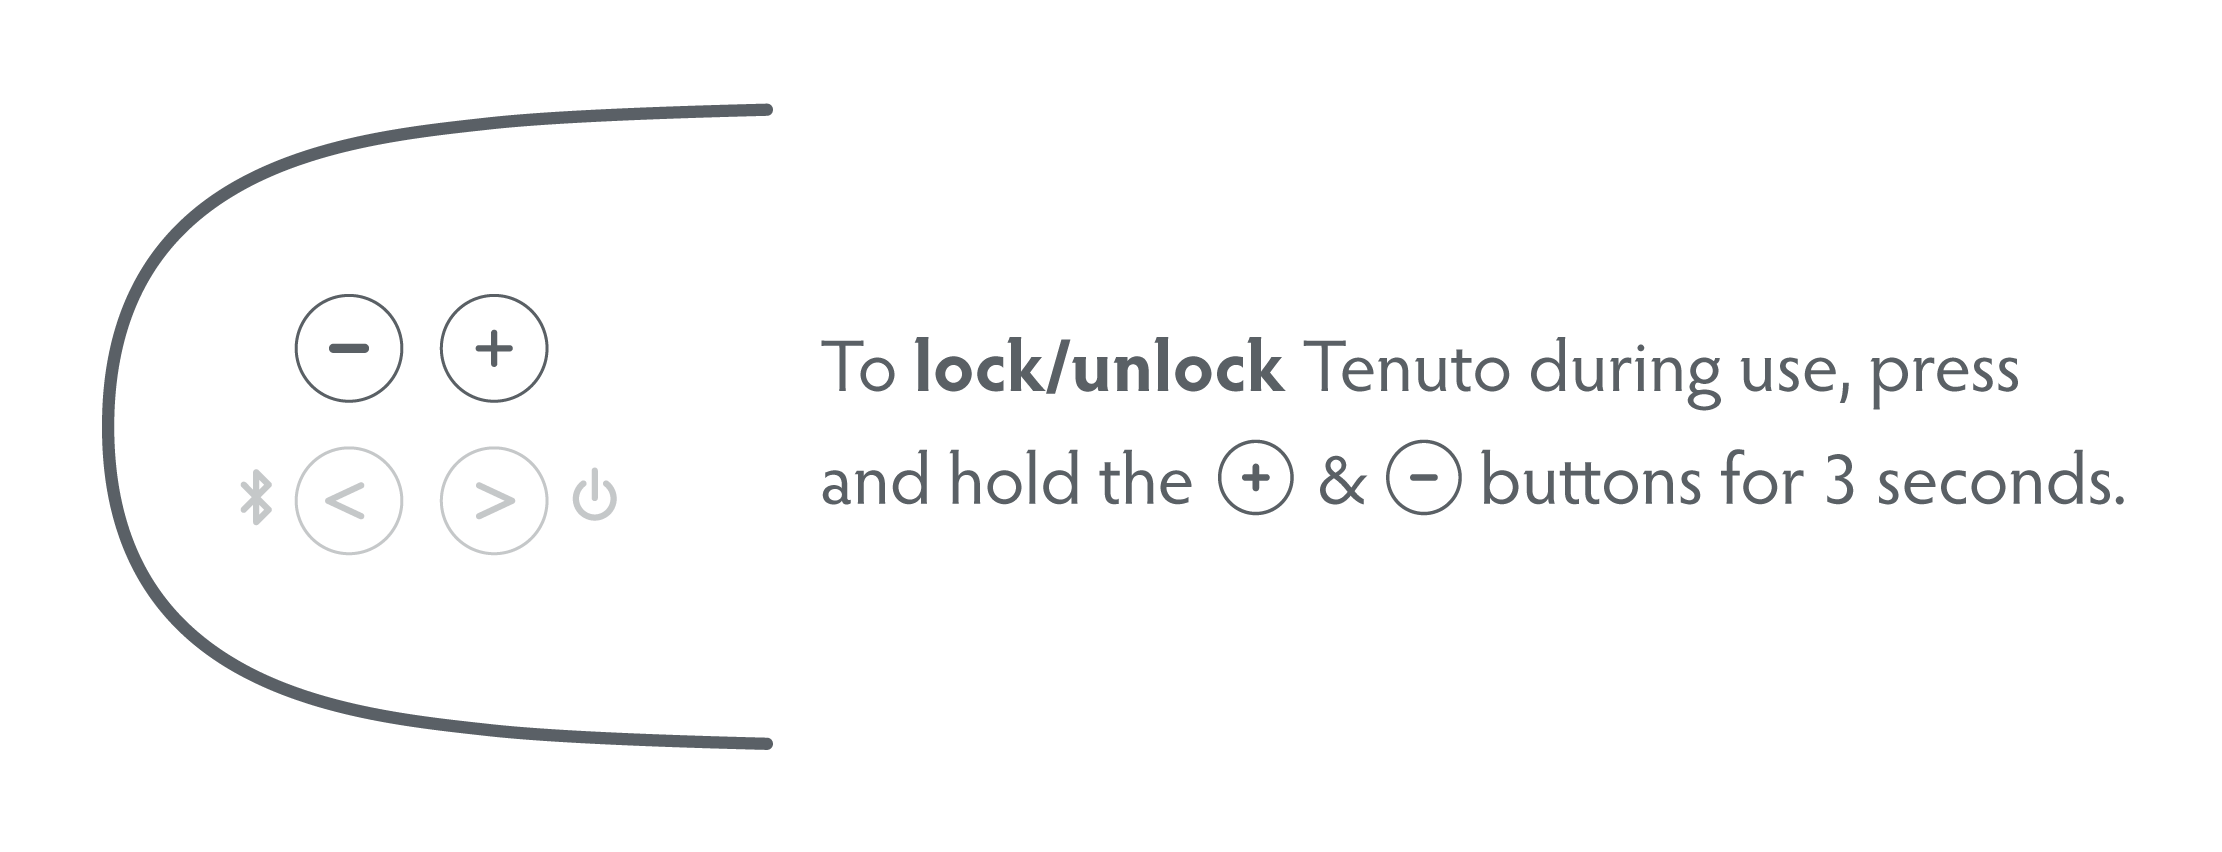 Tenuto how to lock